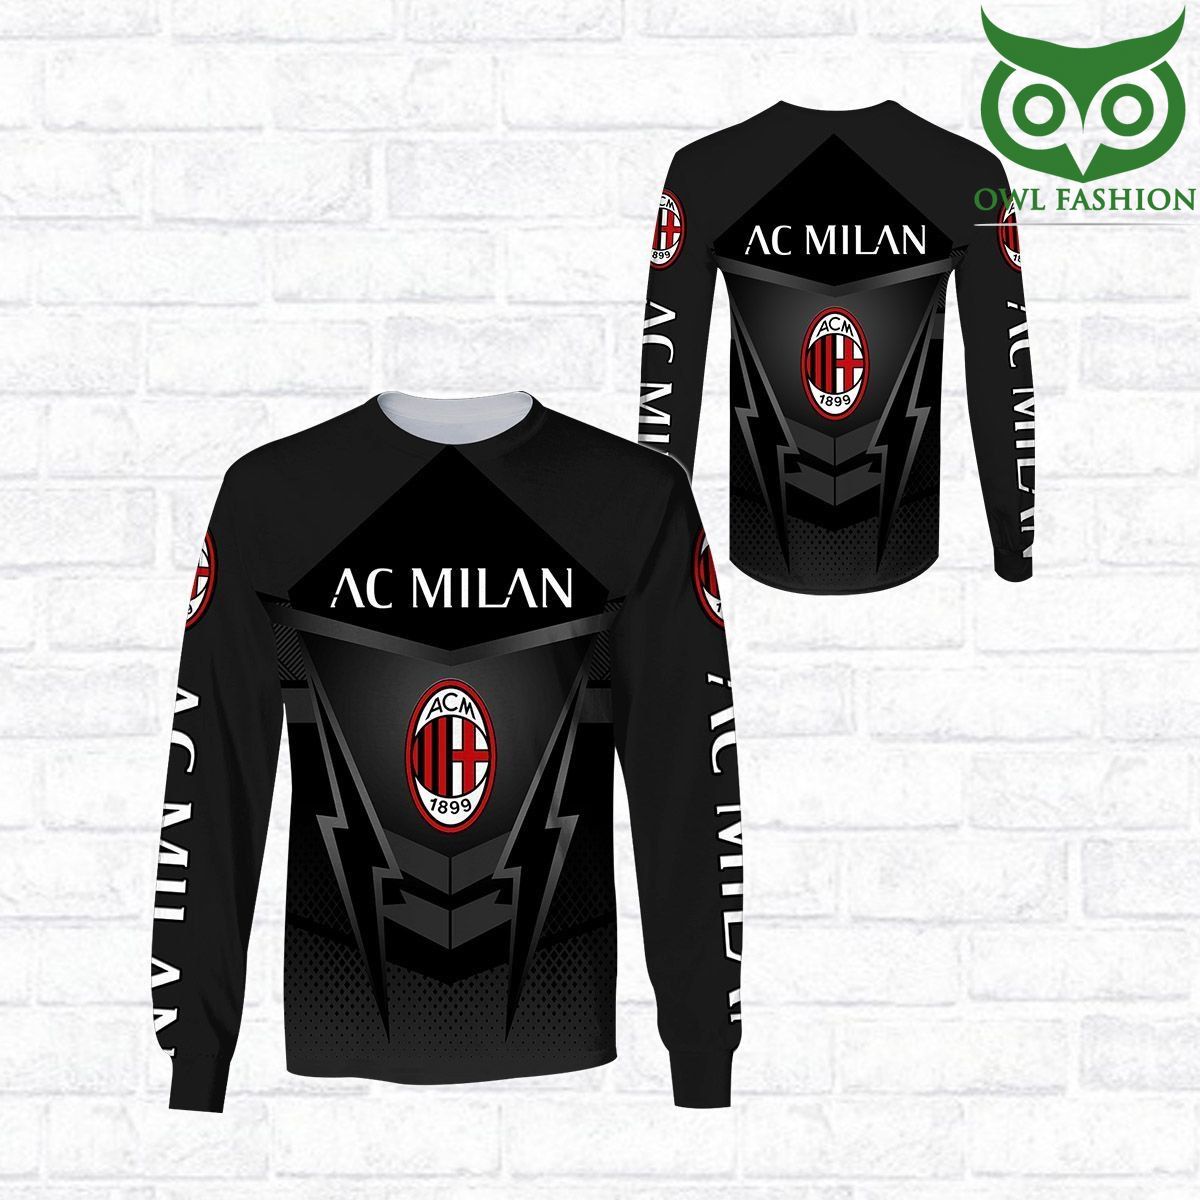 AC Milan Black 3D All Over Printed shirt